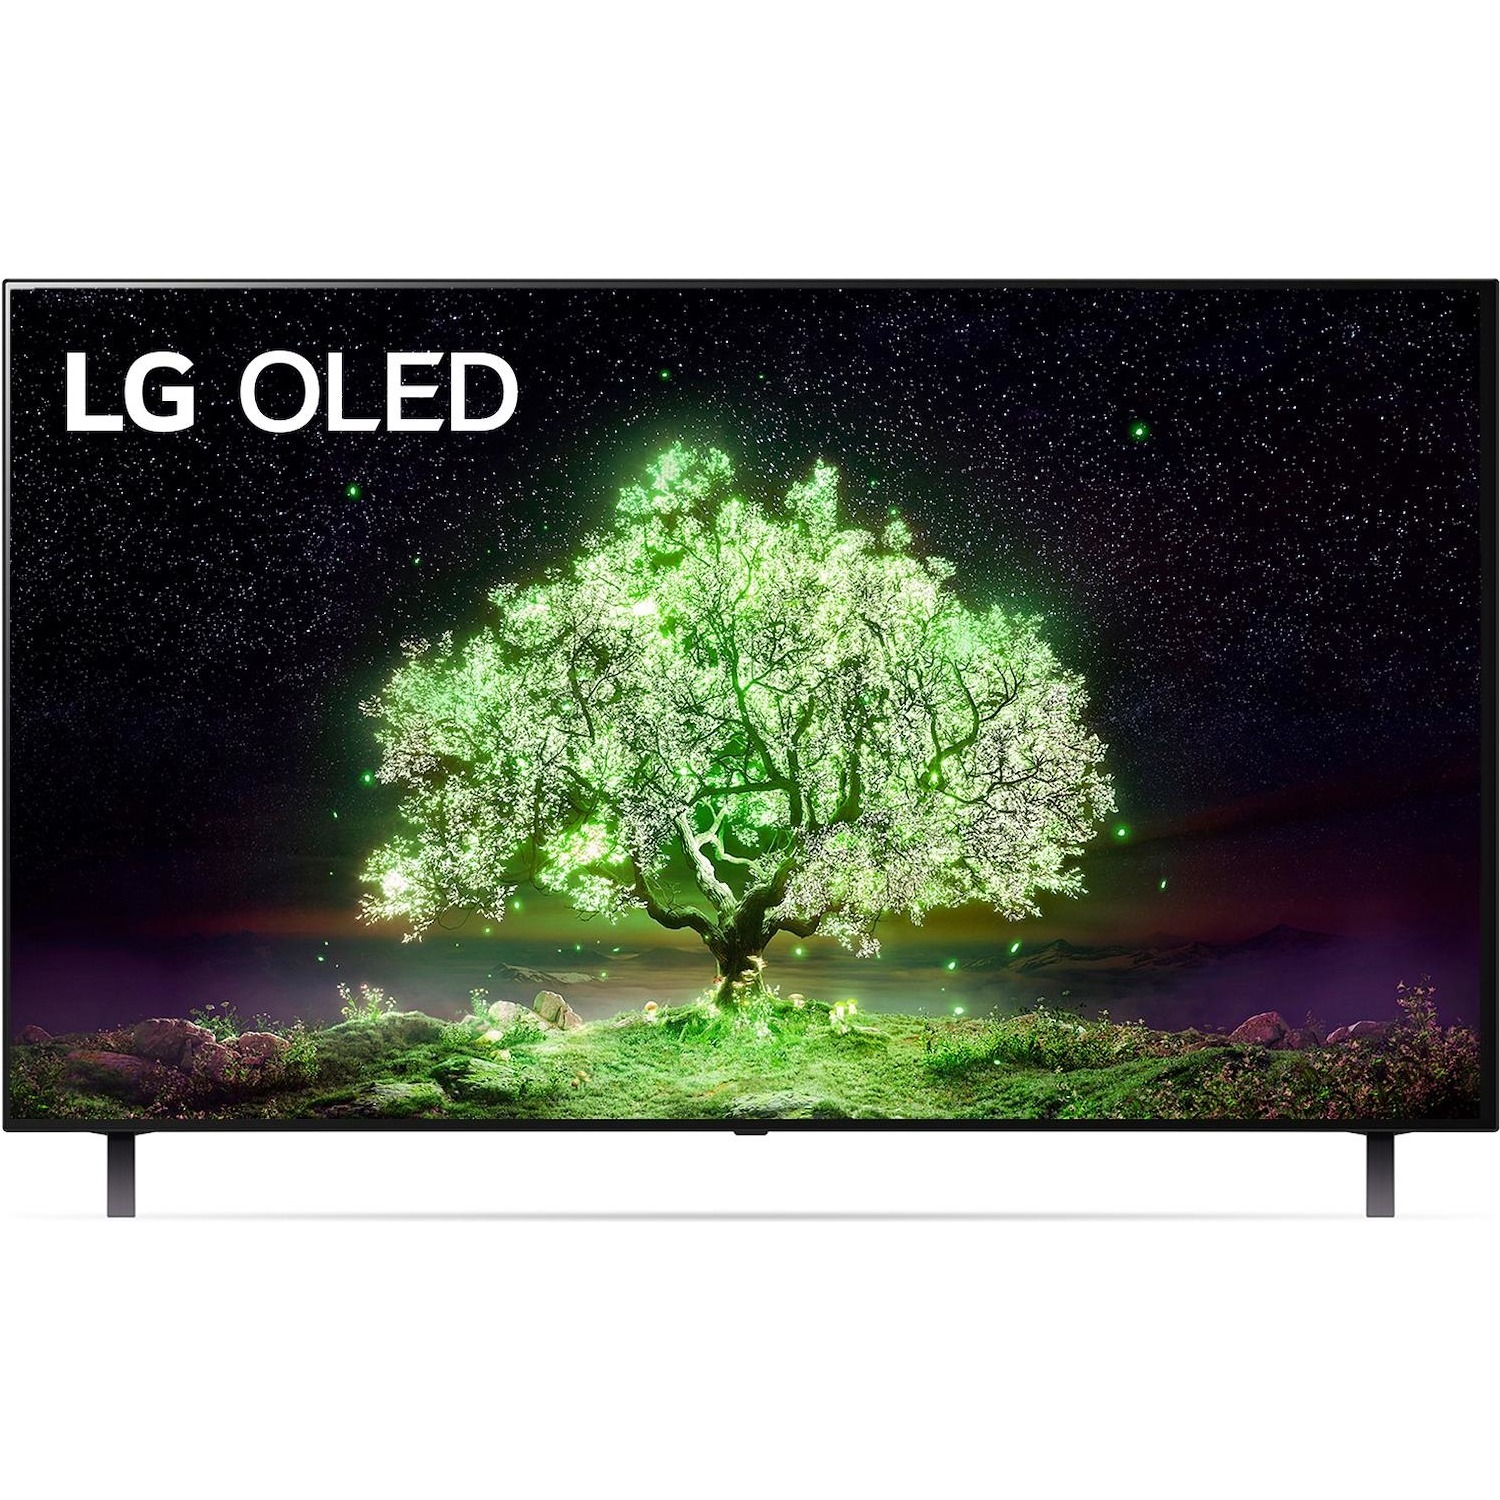 Immagine per TV OLED UHD 4K Smart LG OLED55A16 da DIMOStore